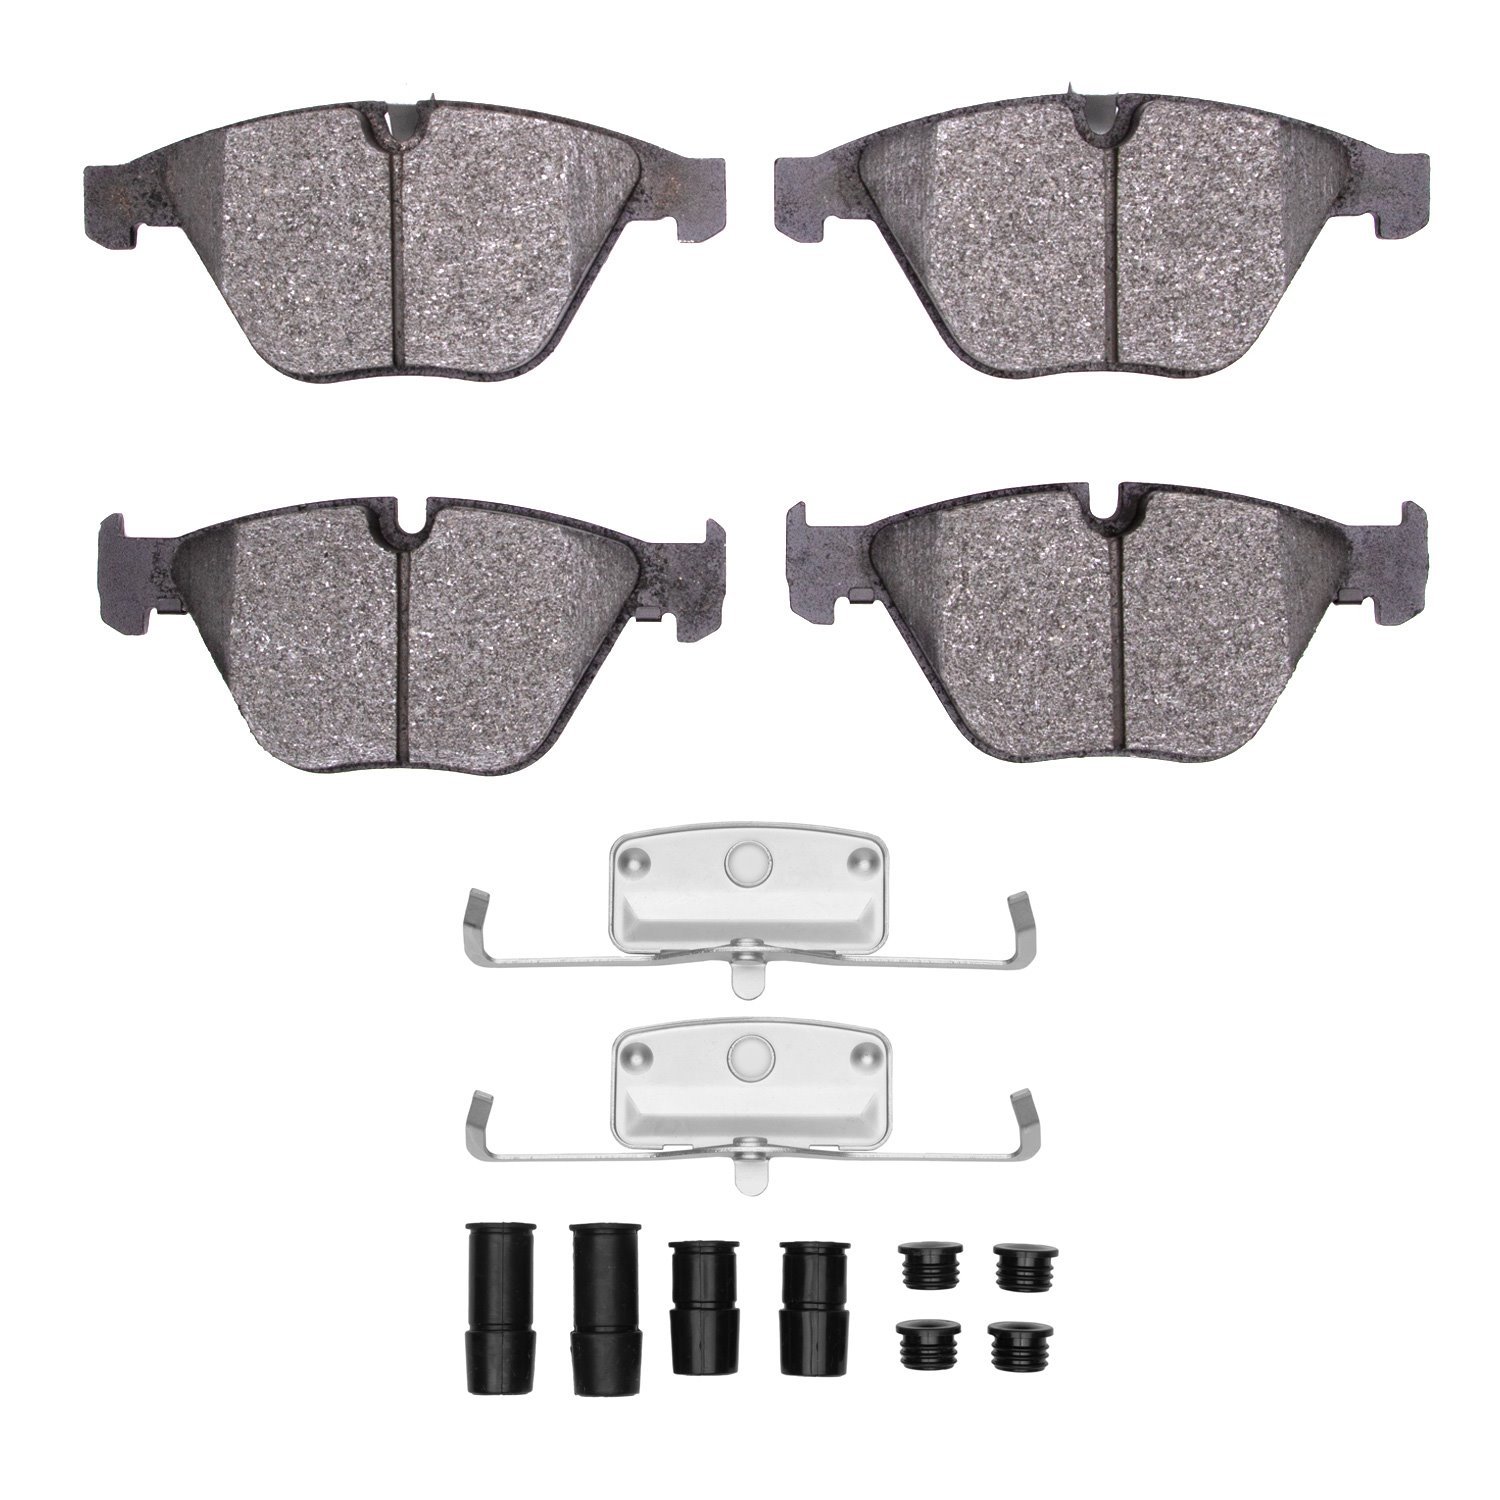 1551-0918-11 5000 Advanced Low-Metallic Brake Pads & Hardware Kit, Fits Select BMW, Position: Front